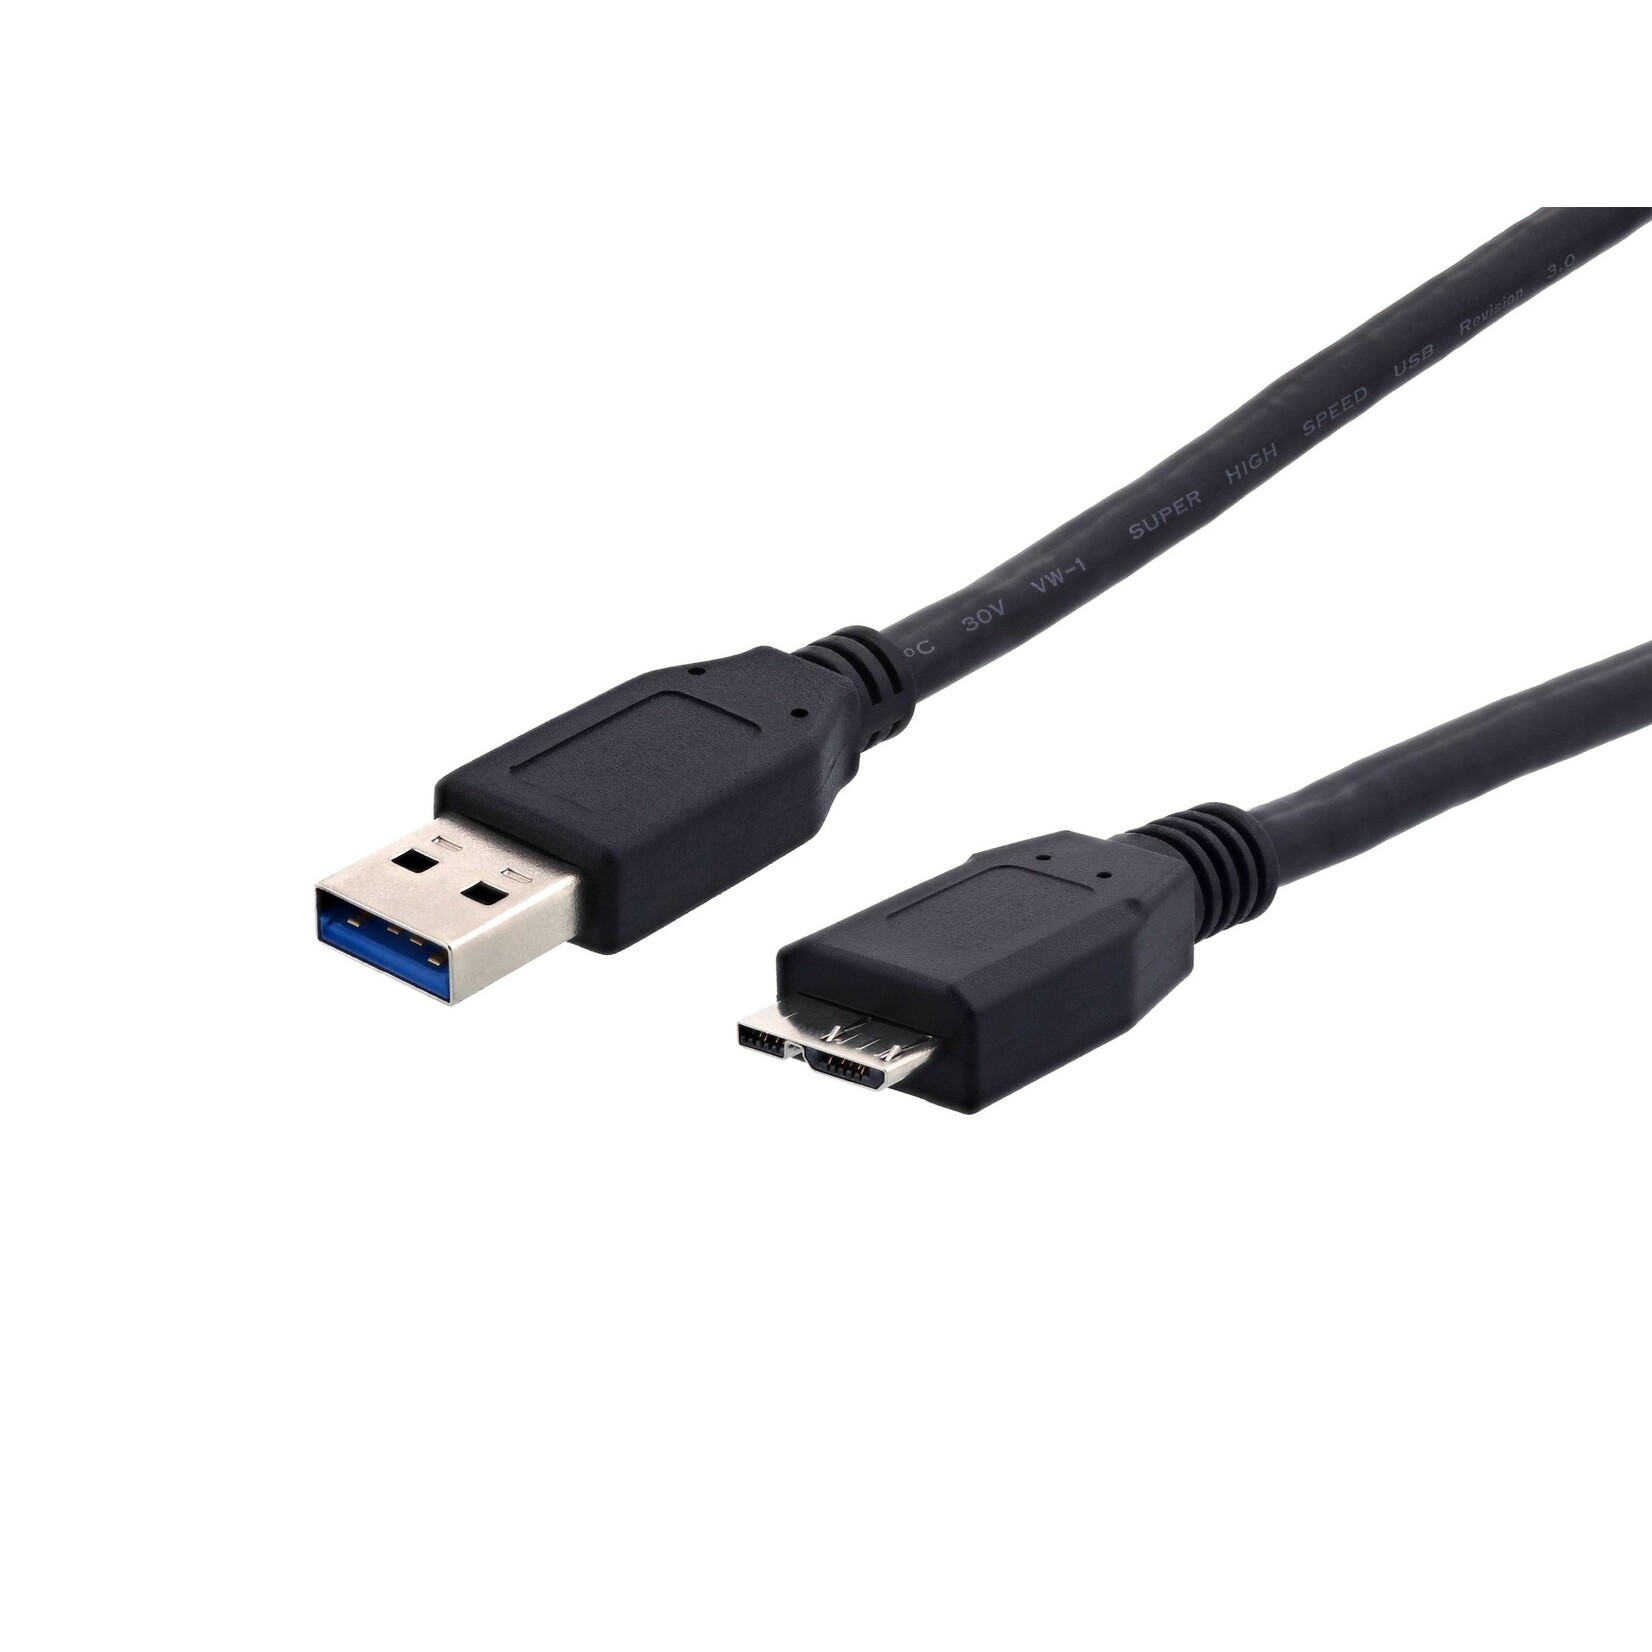 10' USB 3.0 A-M to Micro B-M